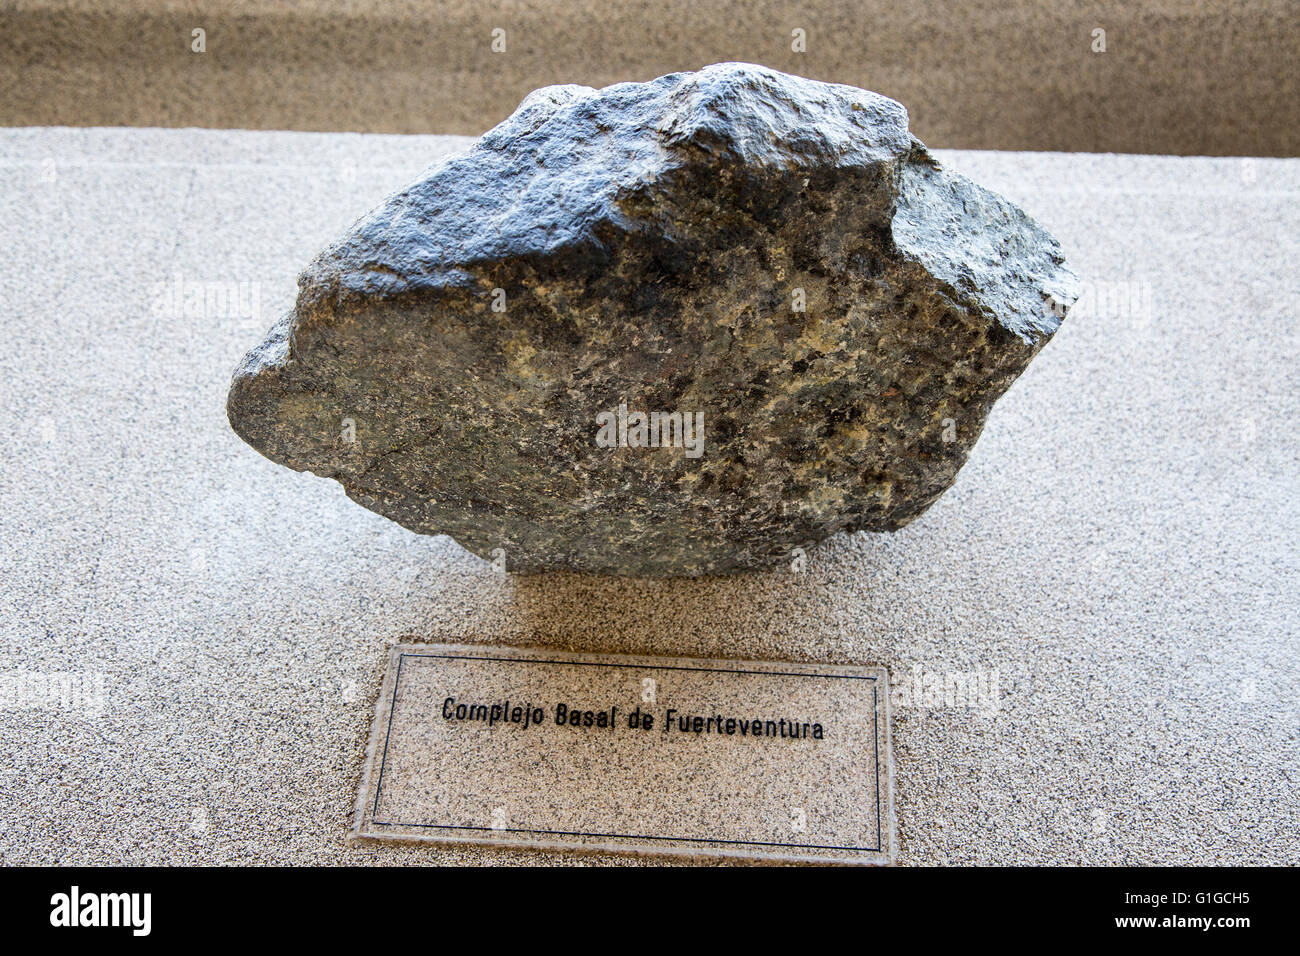 Complex basal rock sample from Fuerteventura, geology display Casa de los Volcanes volcanic study centre, Lanzarote, Stock Photo